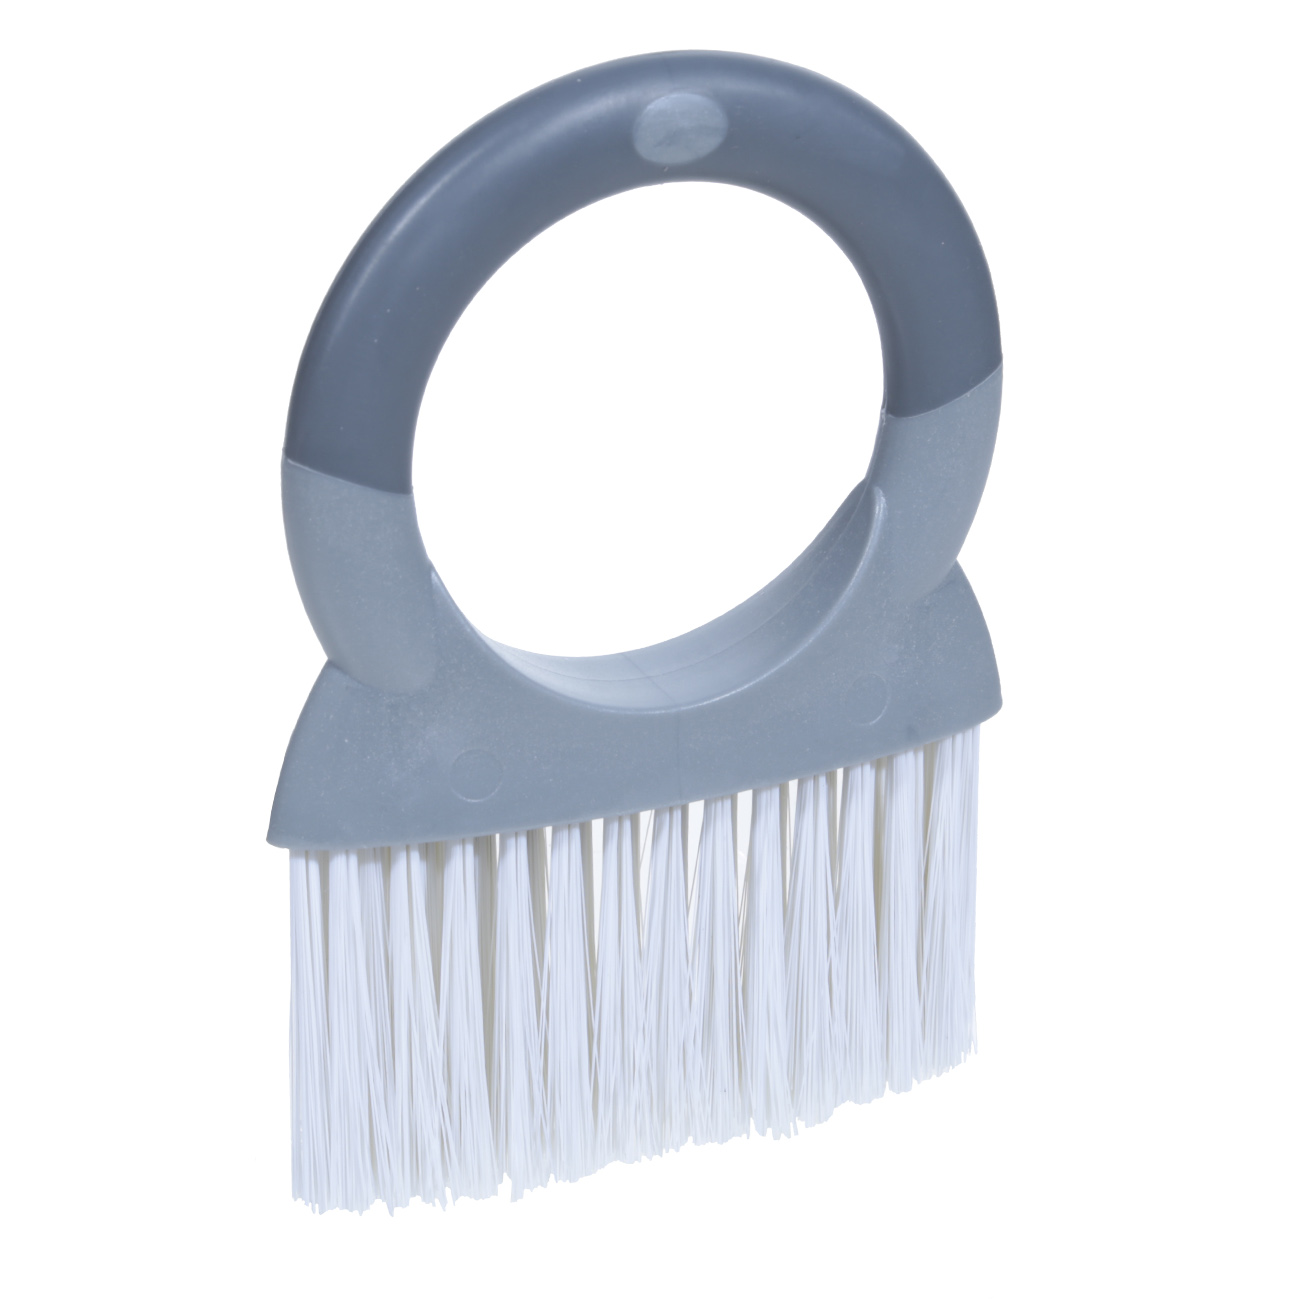 Garbage brush, with dustpan, 21 cm, Plastic, round handle, Grey, Clean изображение № 2